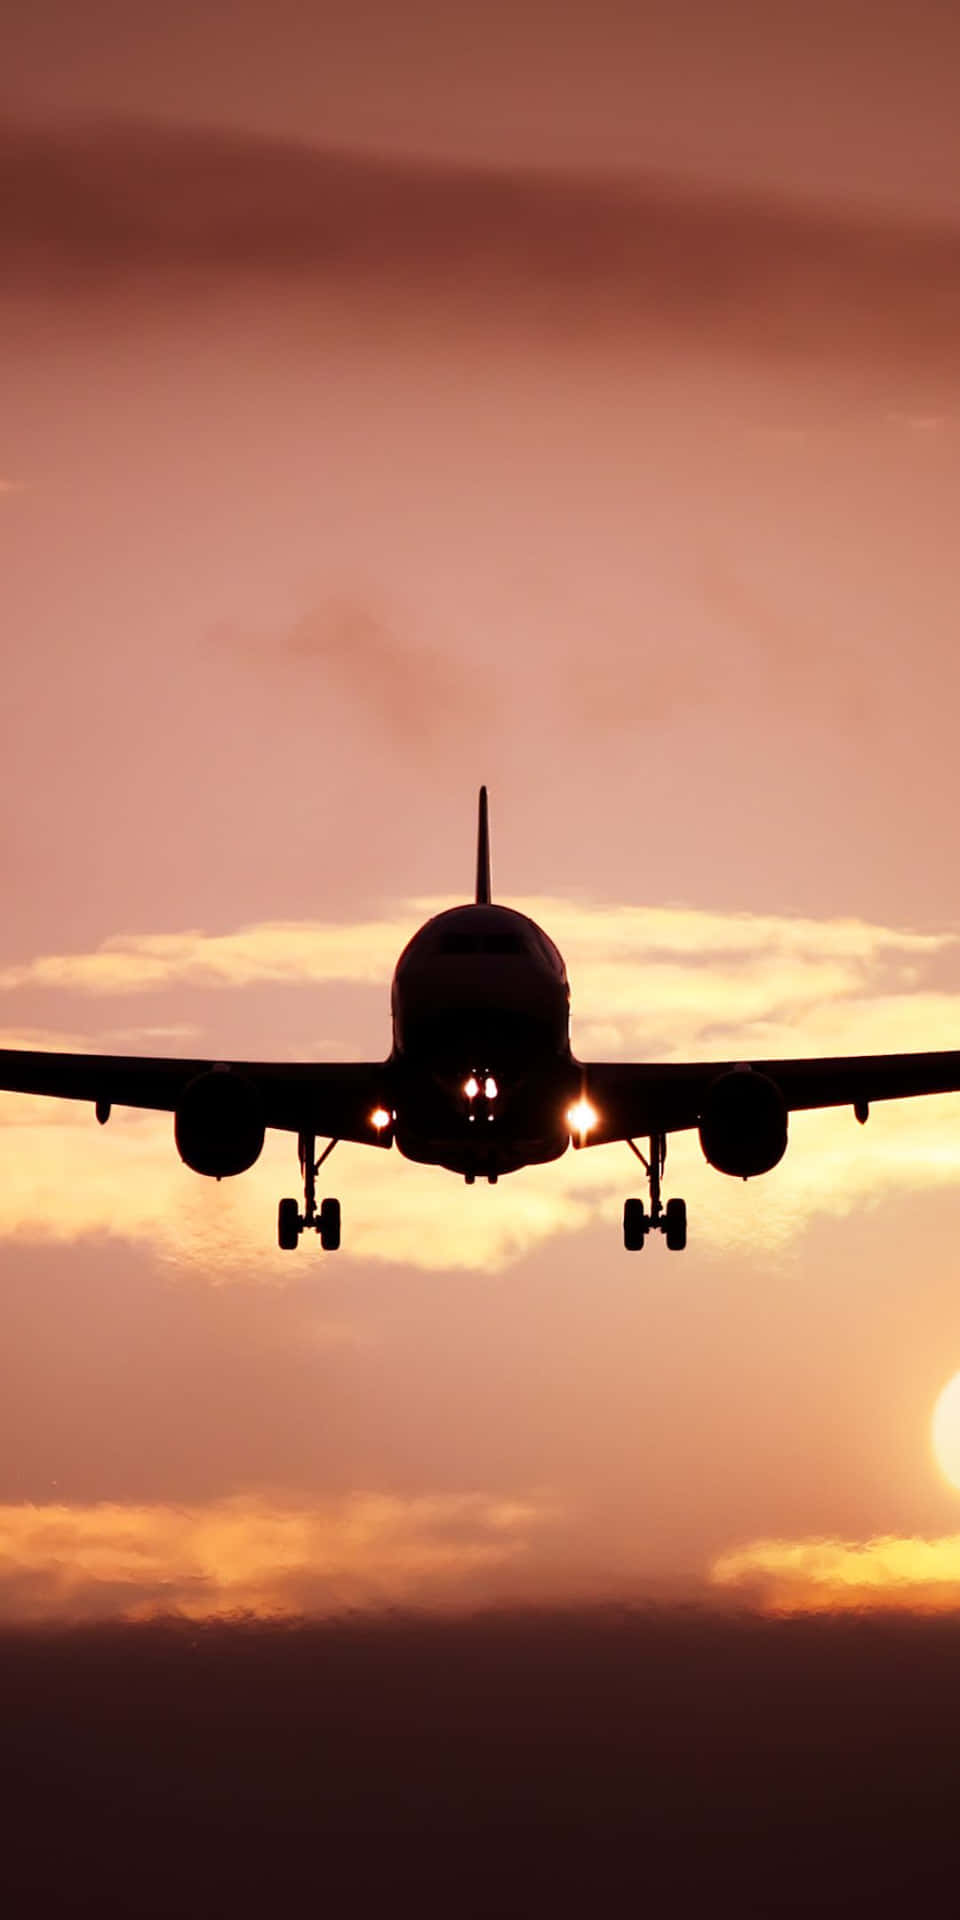 A Passenger Jet Flying In The Sky